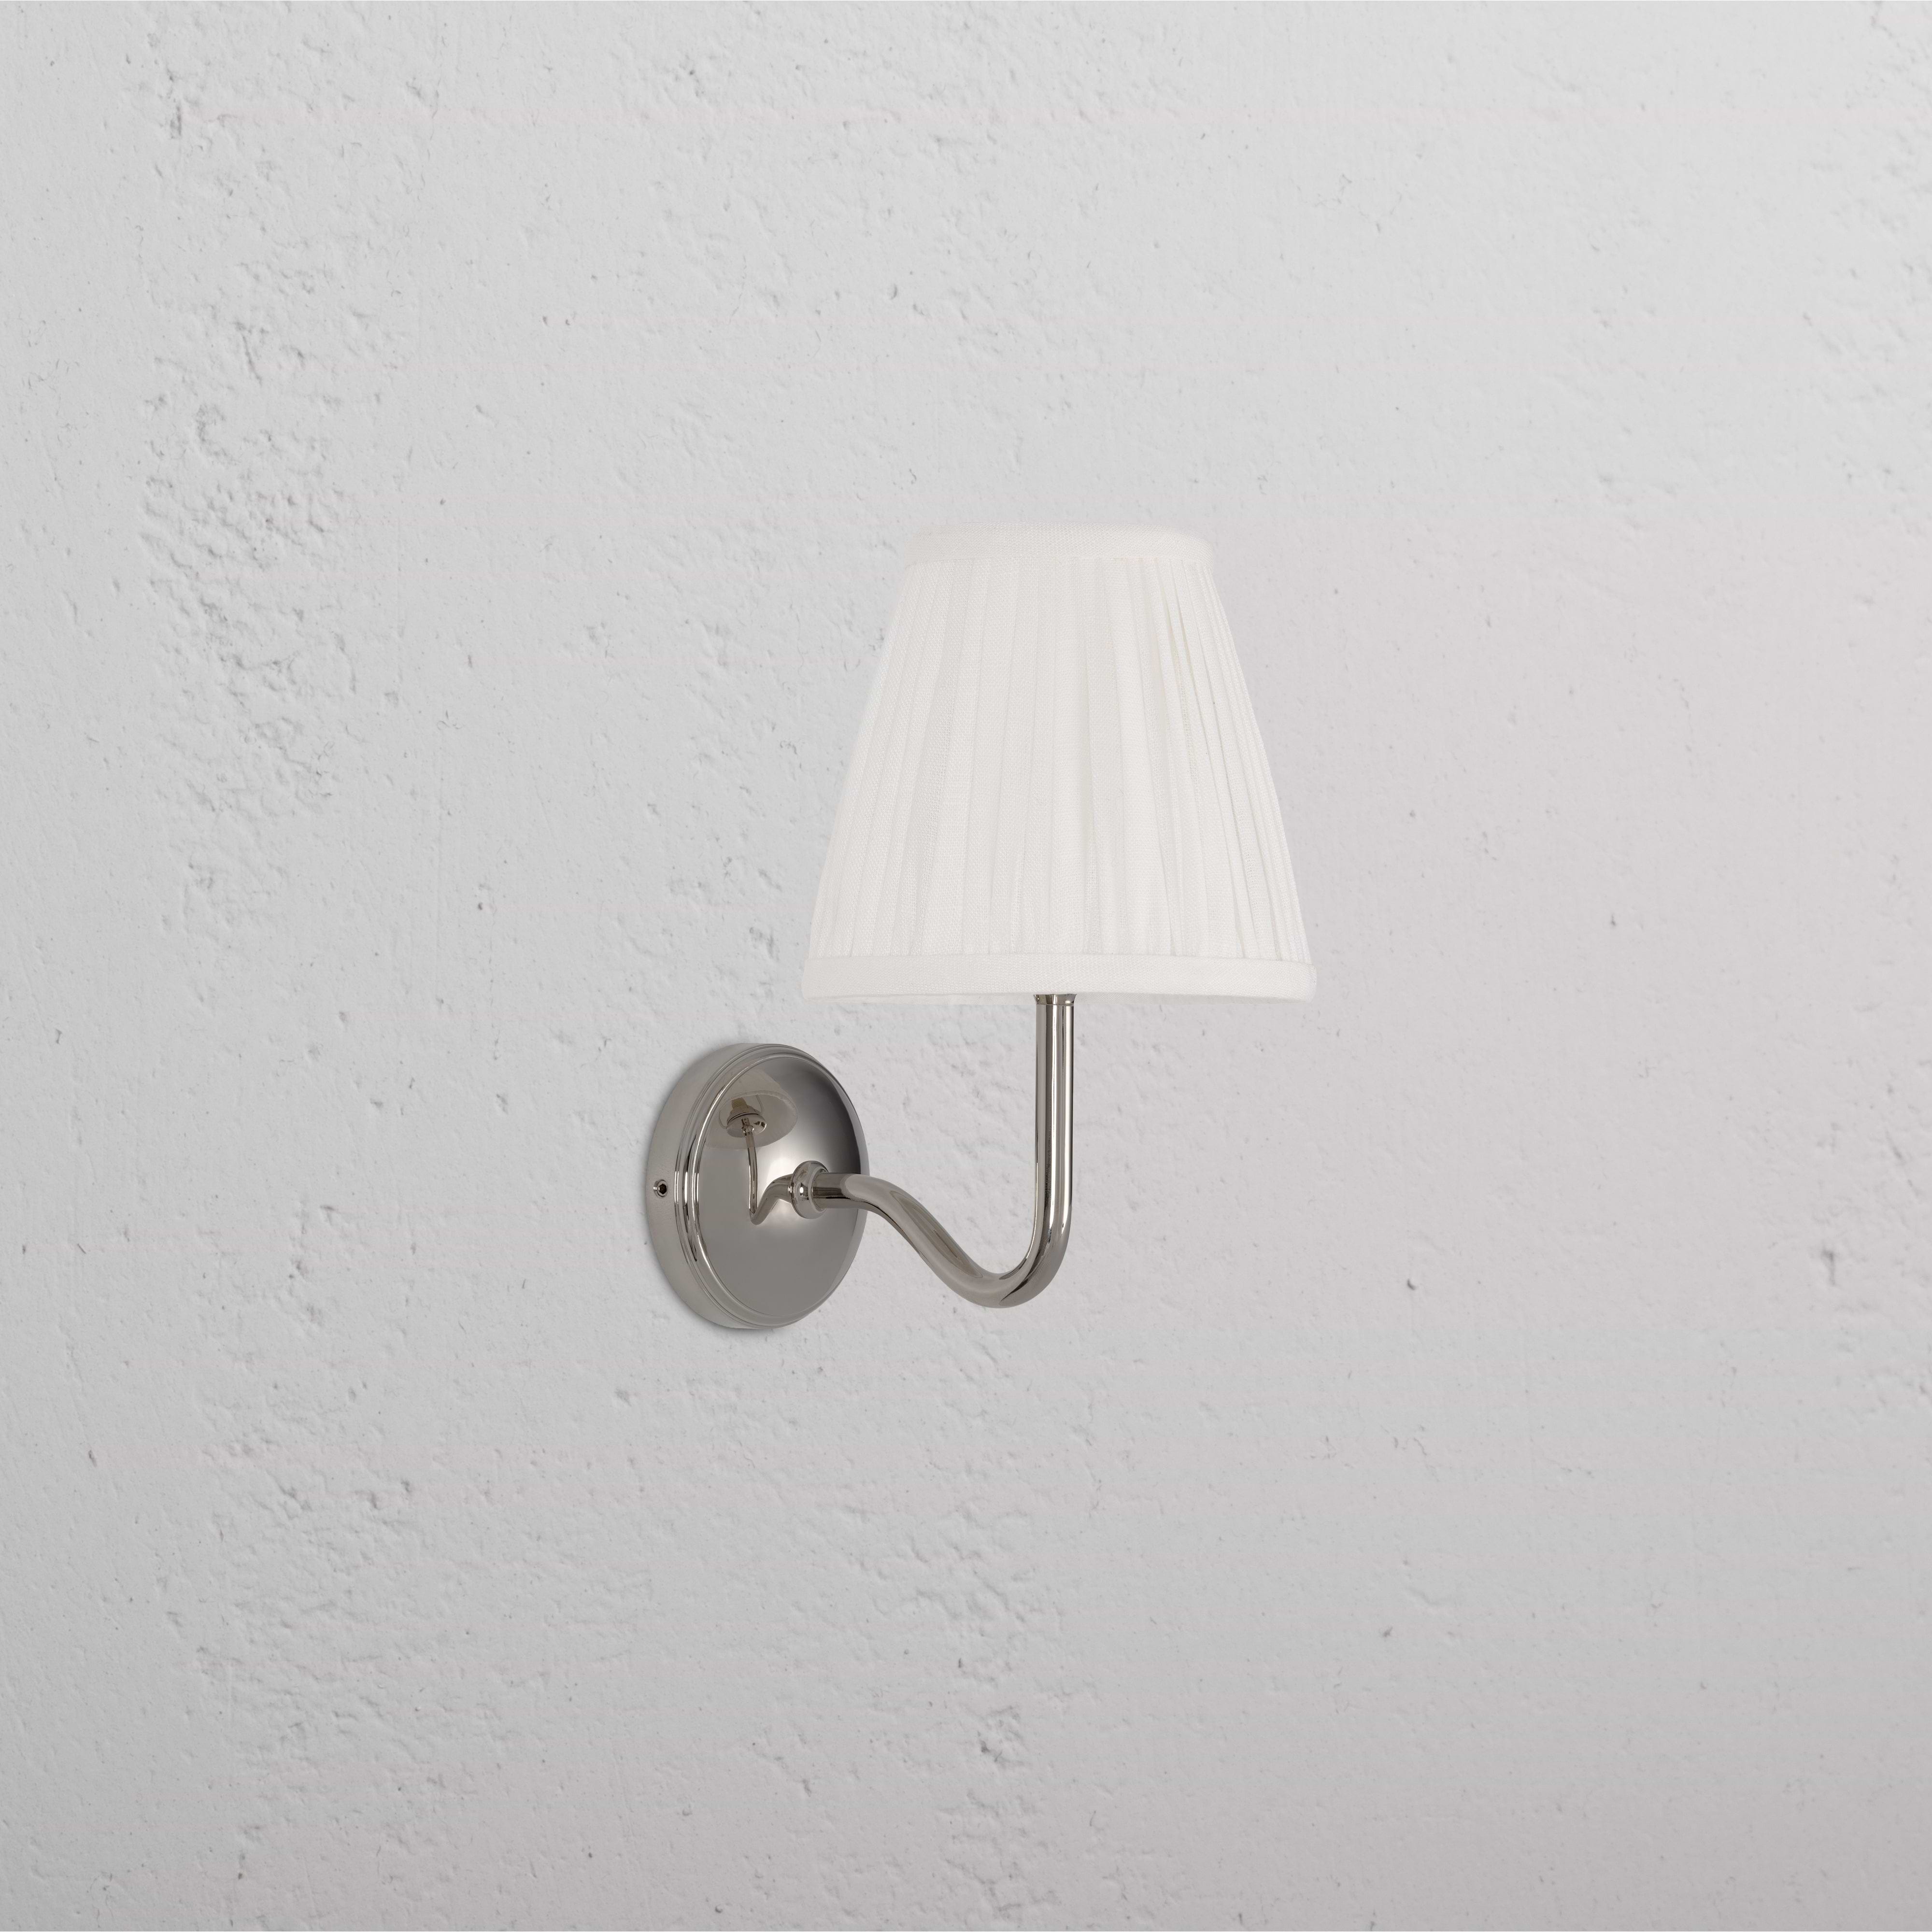 Malvern Small Wall Light Alabaster White - Polished Nickel